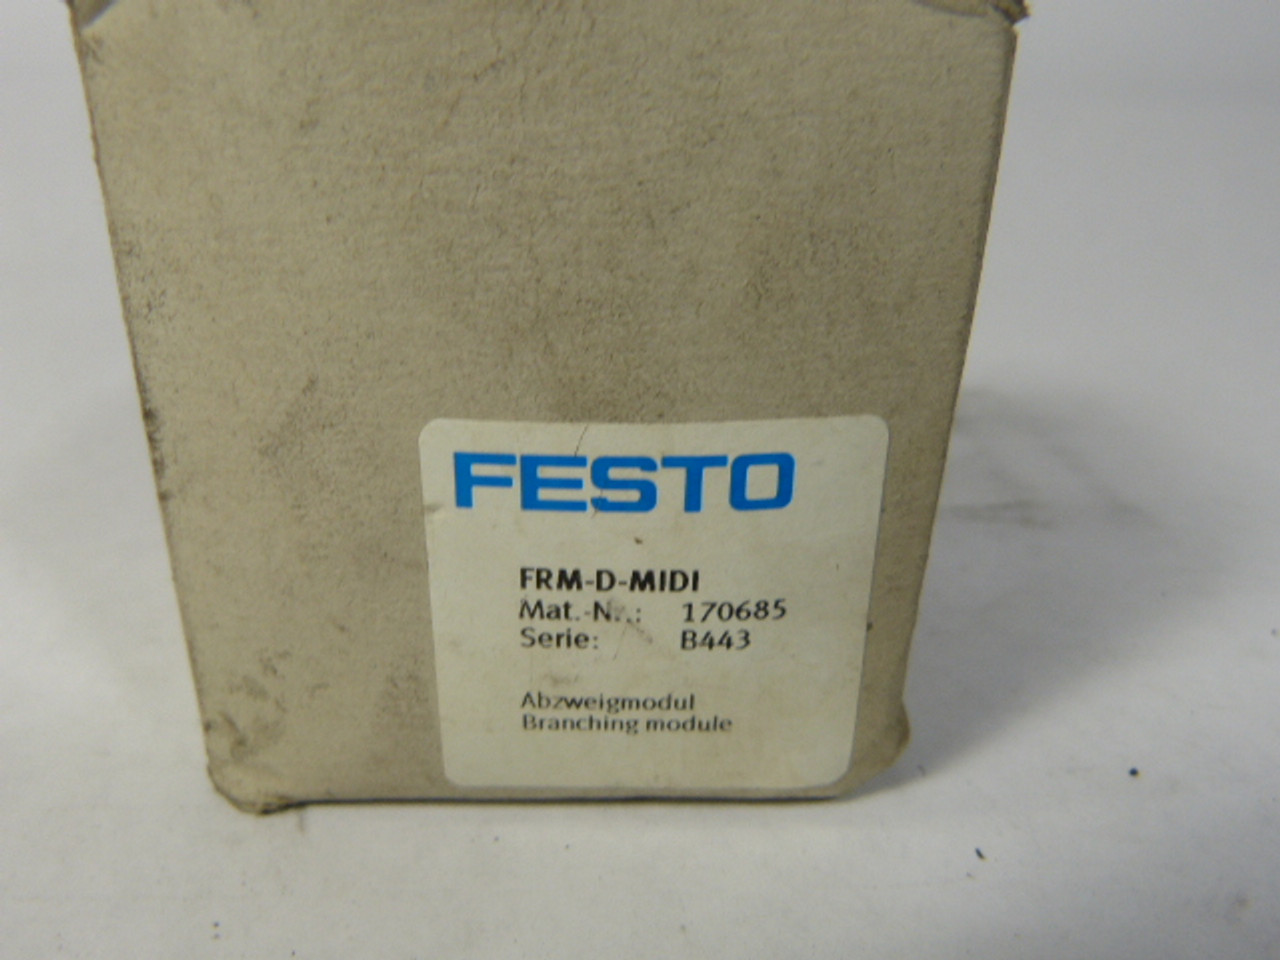 Festo FRM-D-MIDI Pneumatic Branching Module 230 PSI ! NEW !